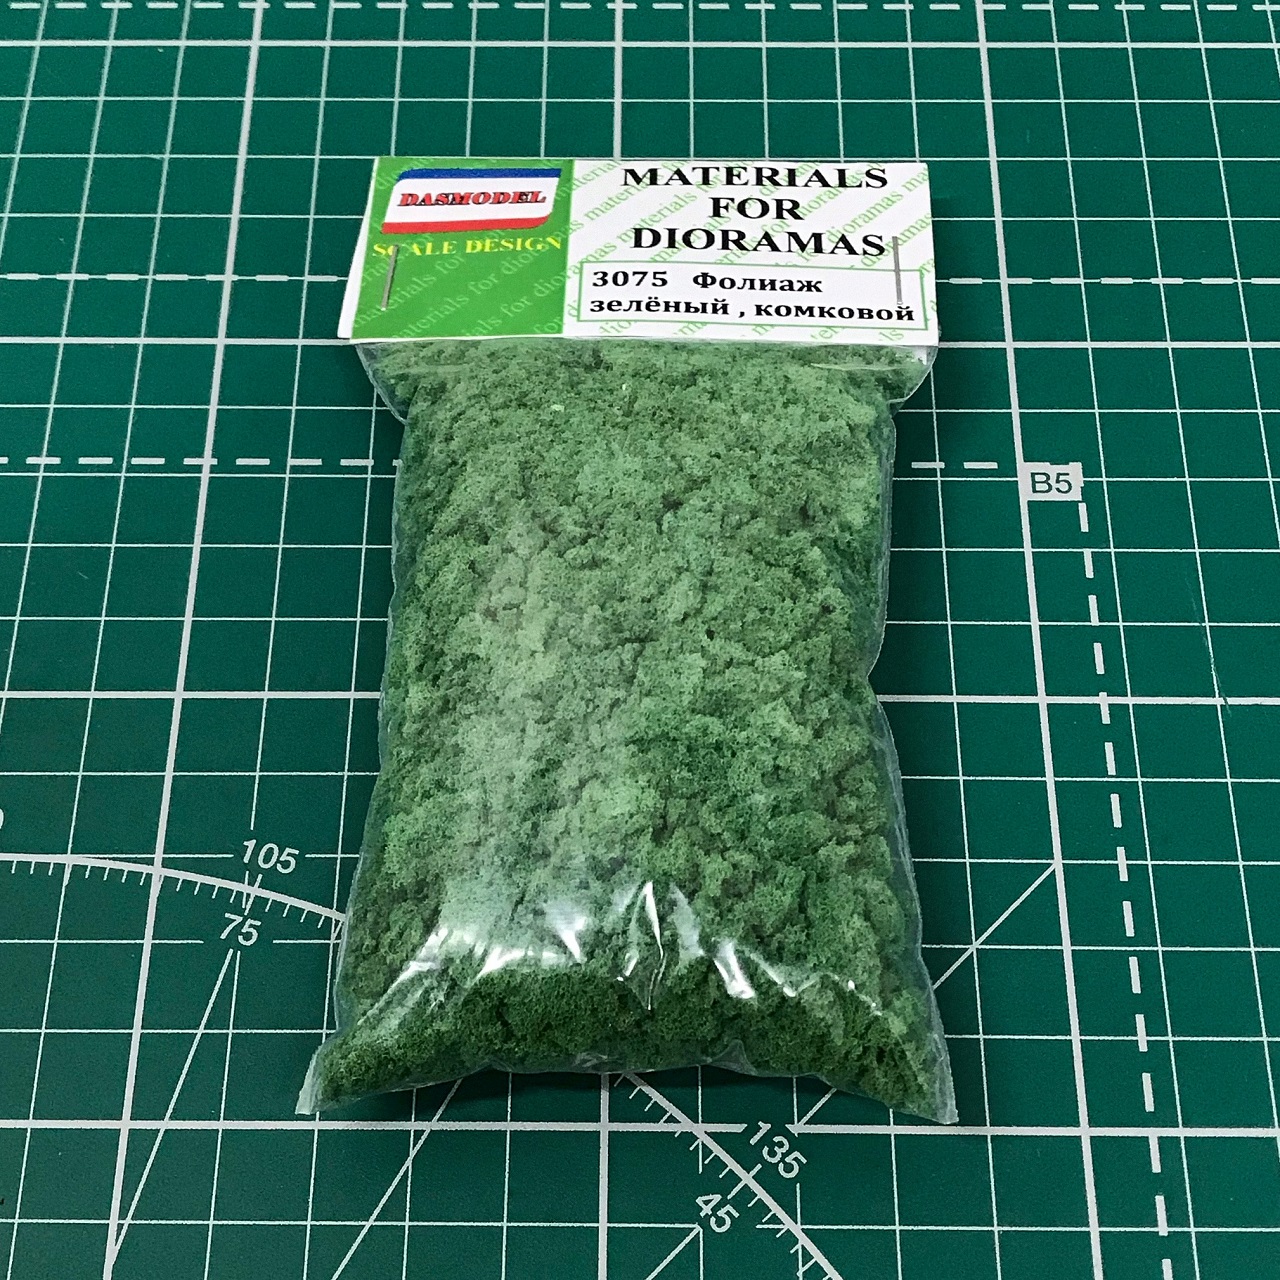 3075  материалы для диорам  Фолиаж зеленый комковой